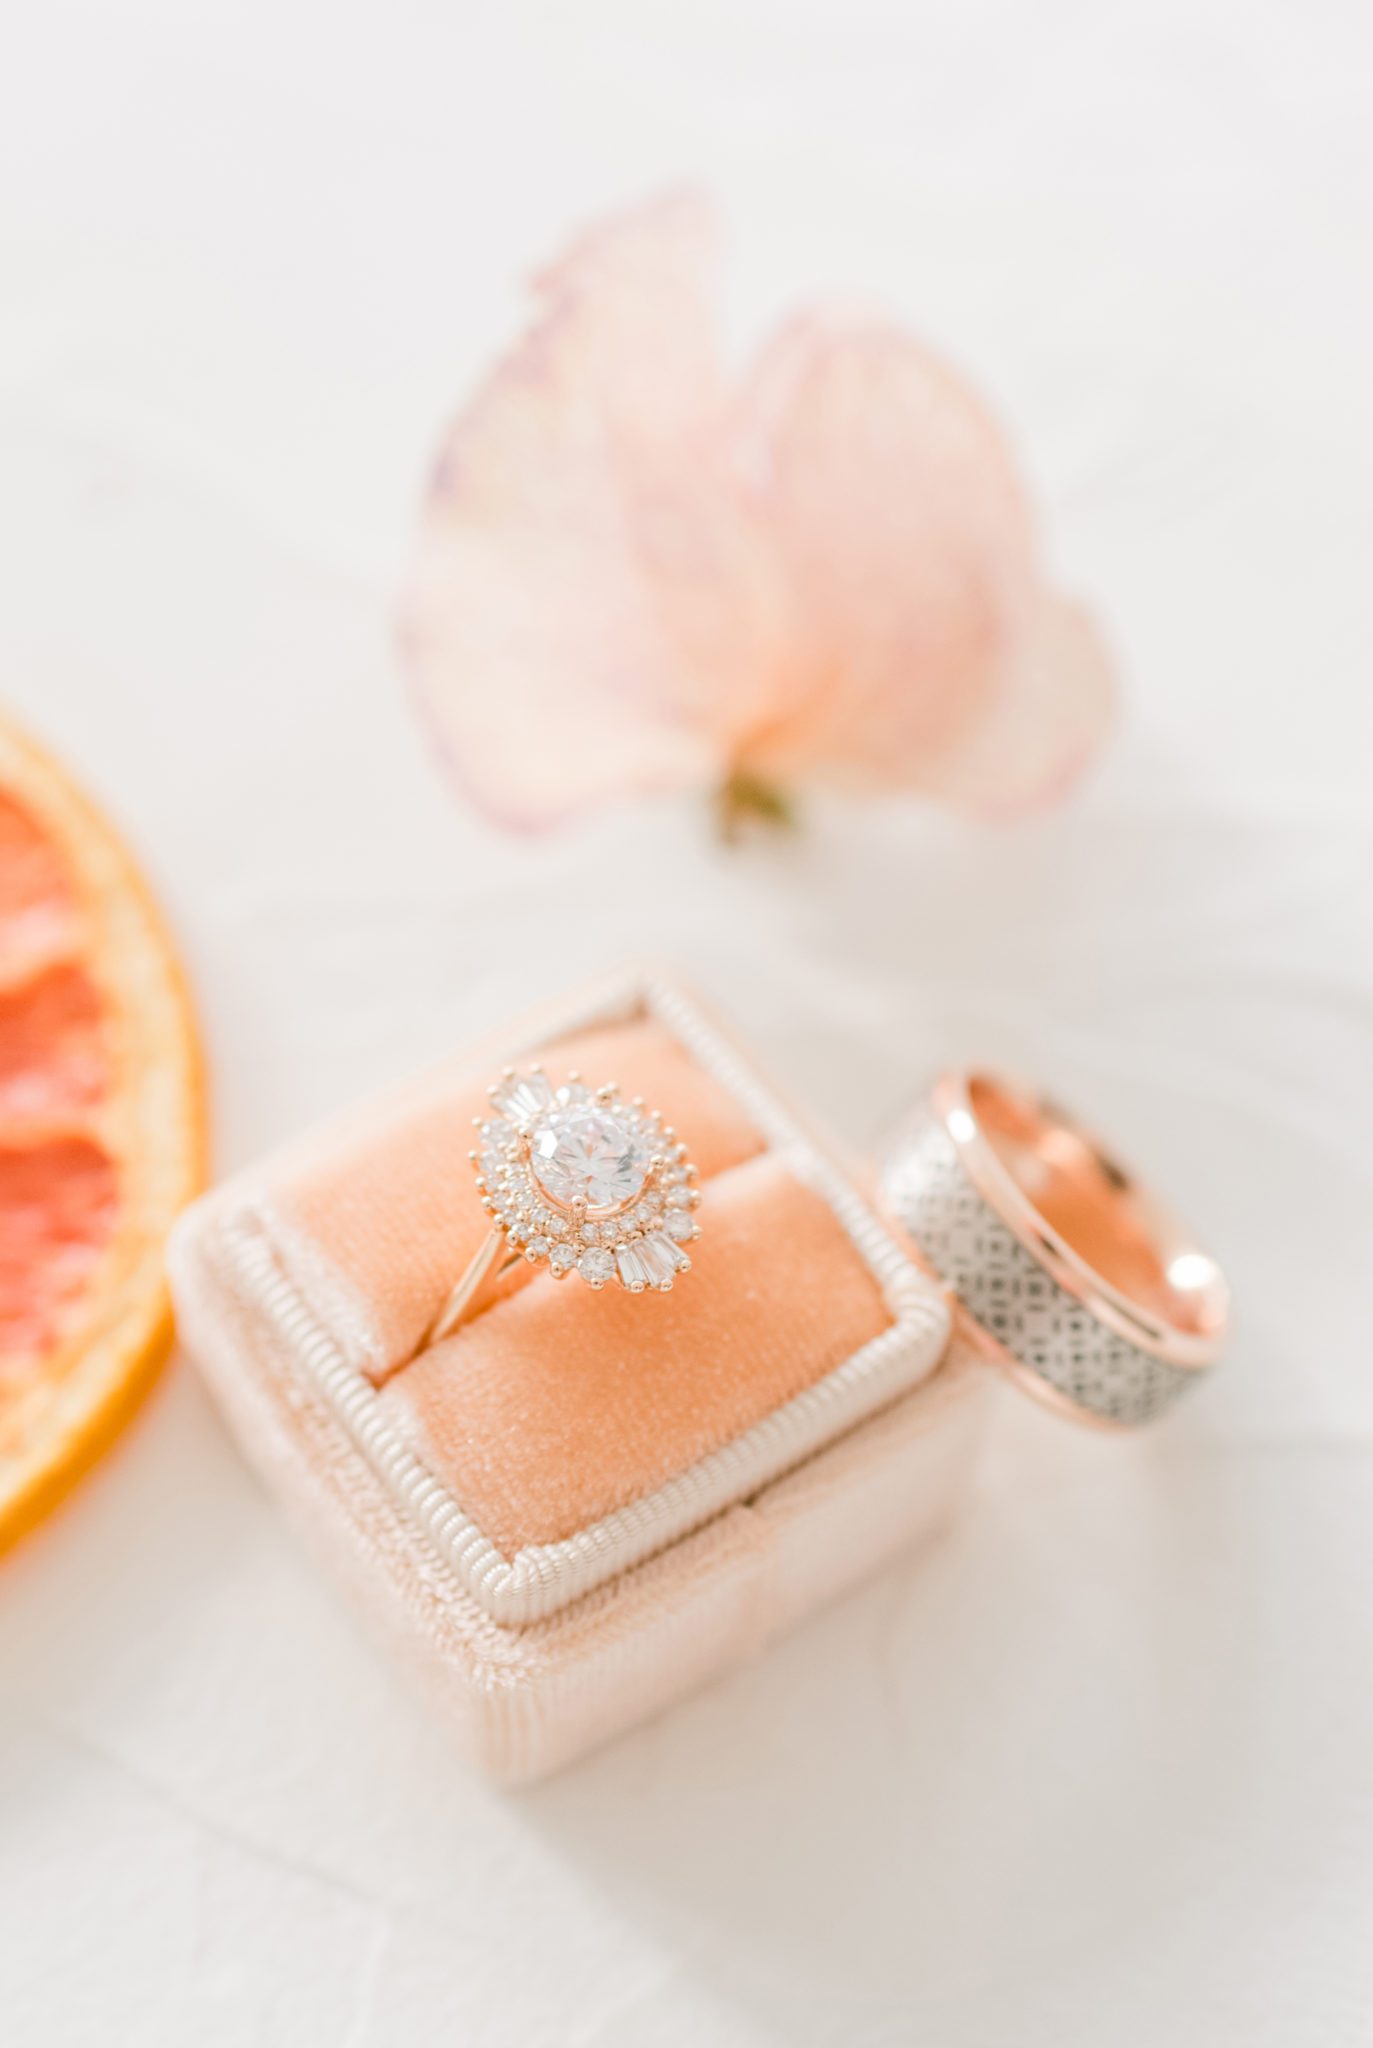 Peach wedding box, vintage wedding ring, wedding ring